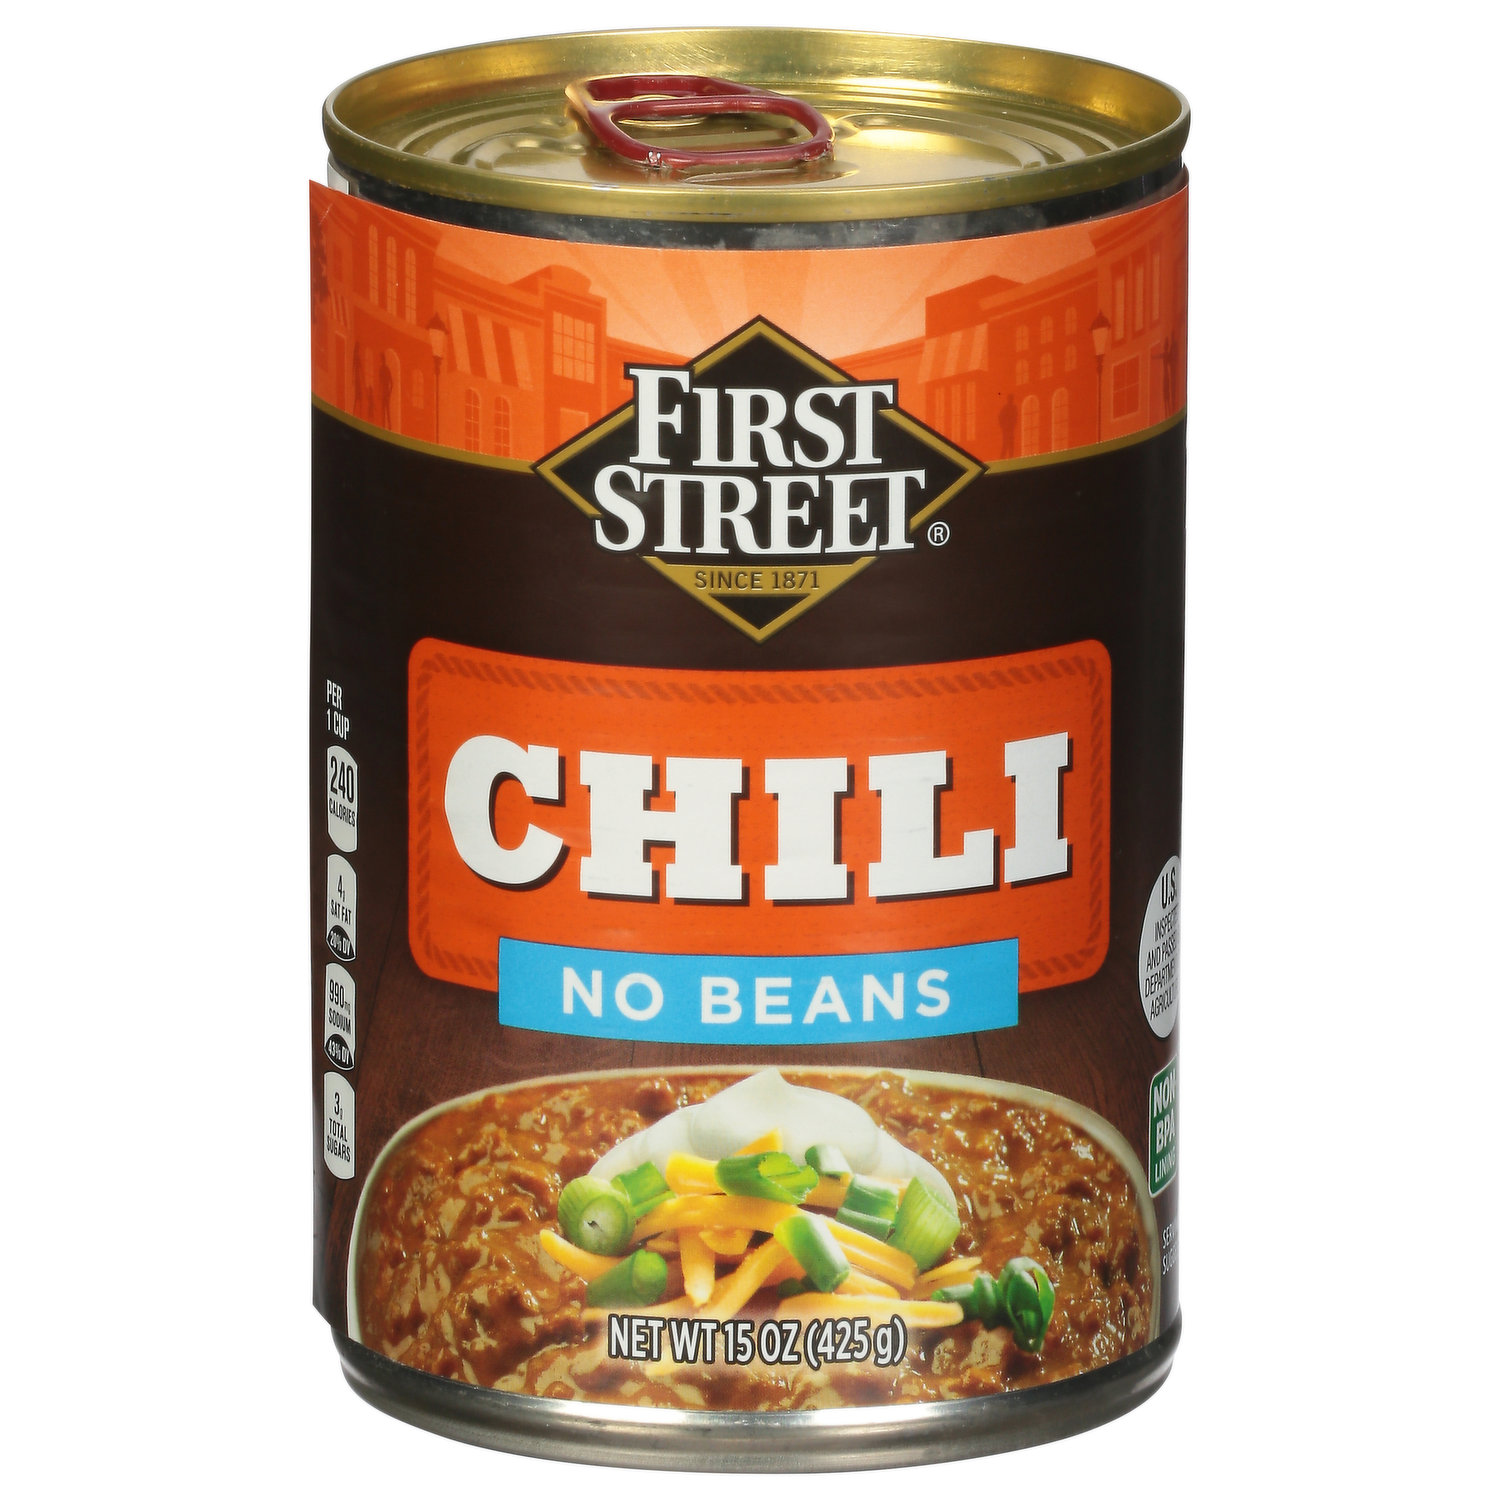 First Street Chili, No Beans - Smart & Final